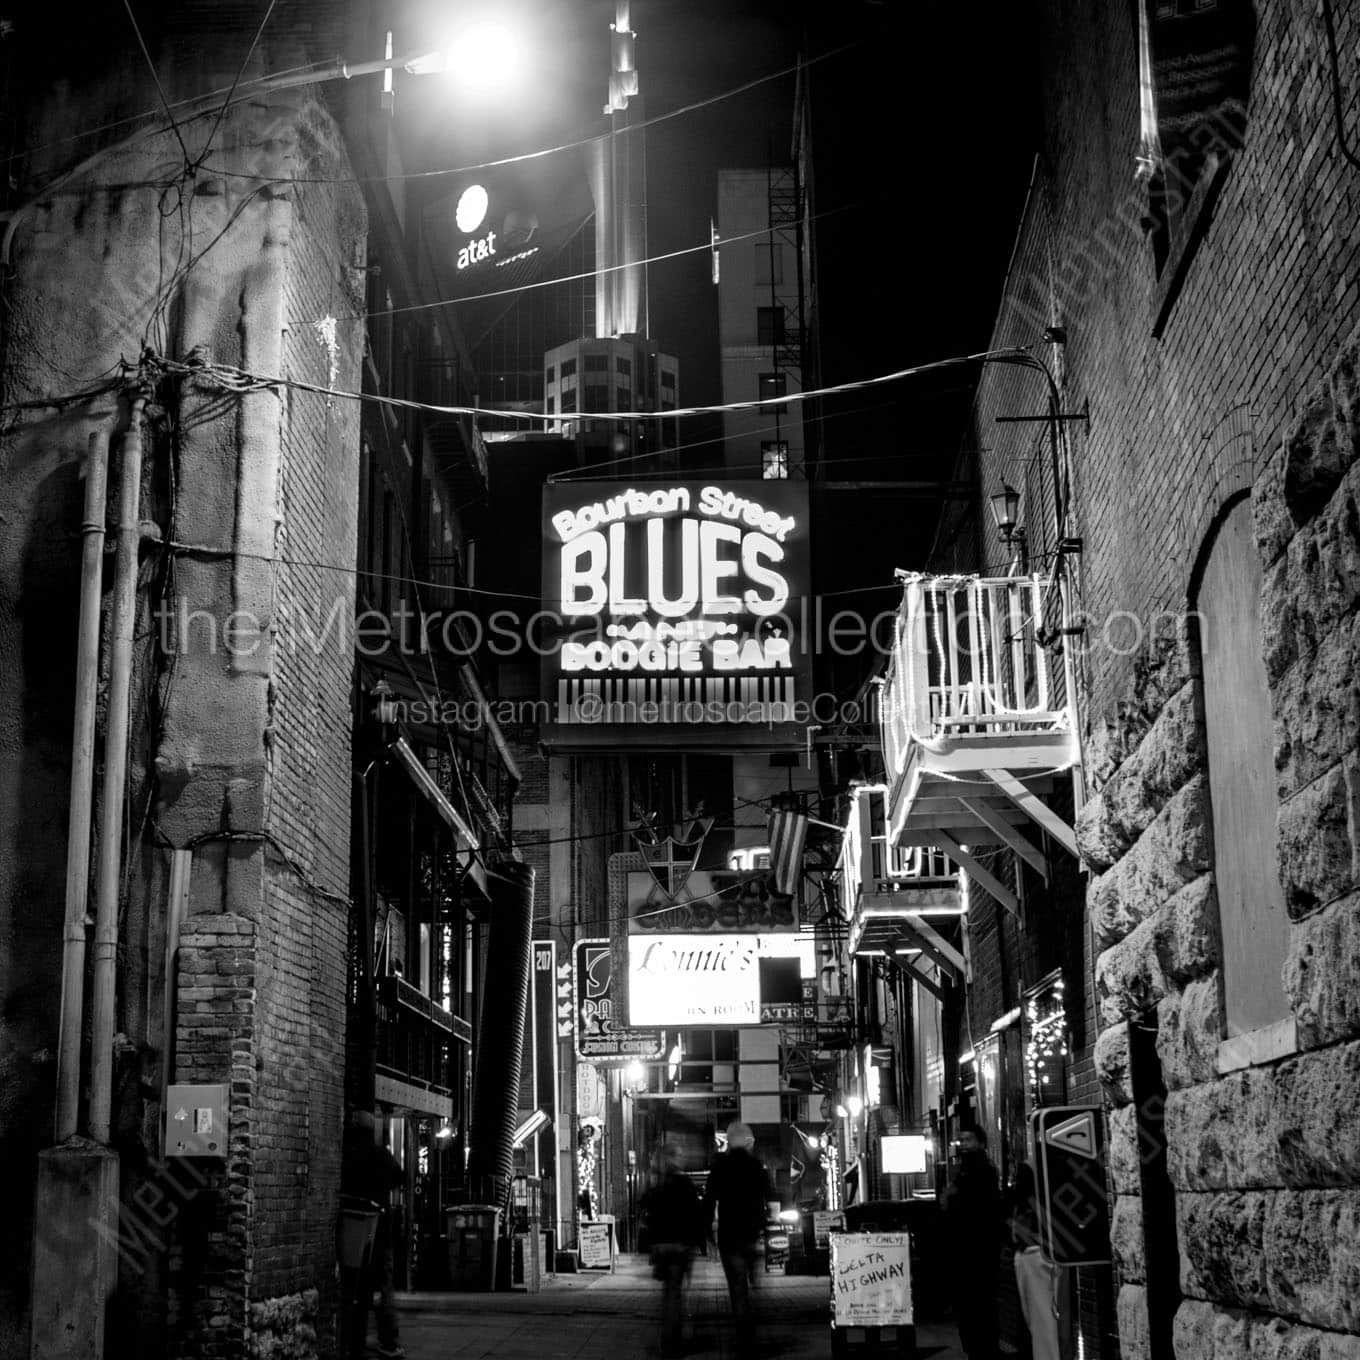 bourbon street blues boogie bar Black & White Office Art